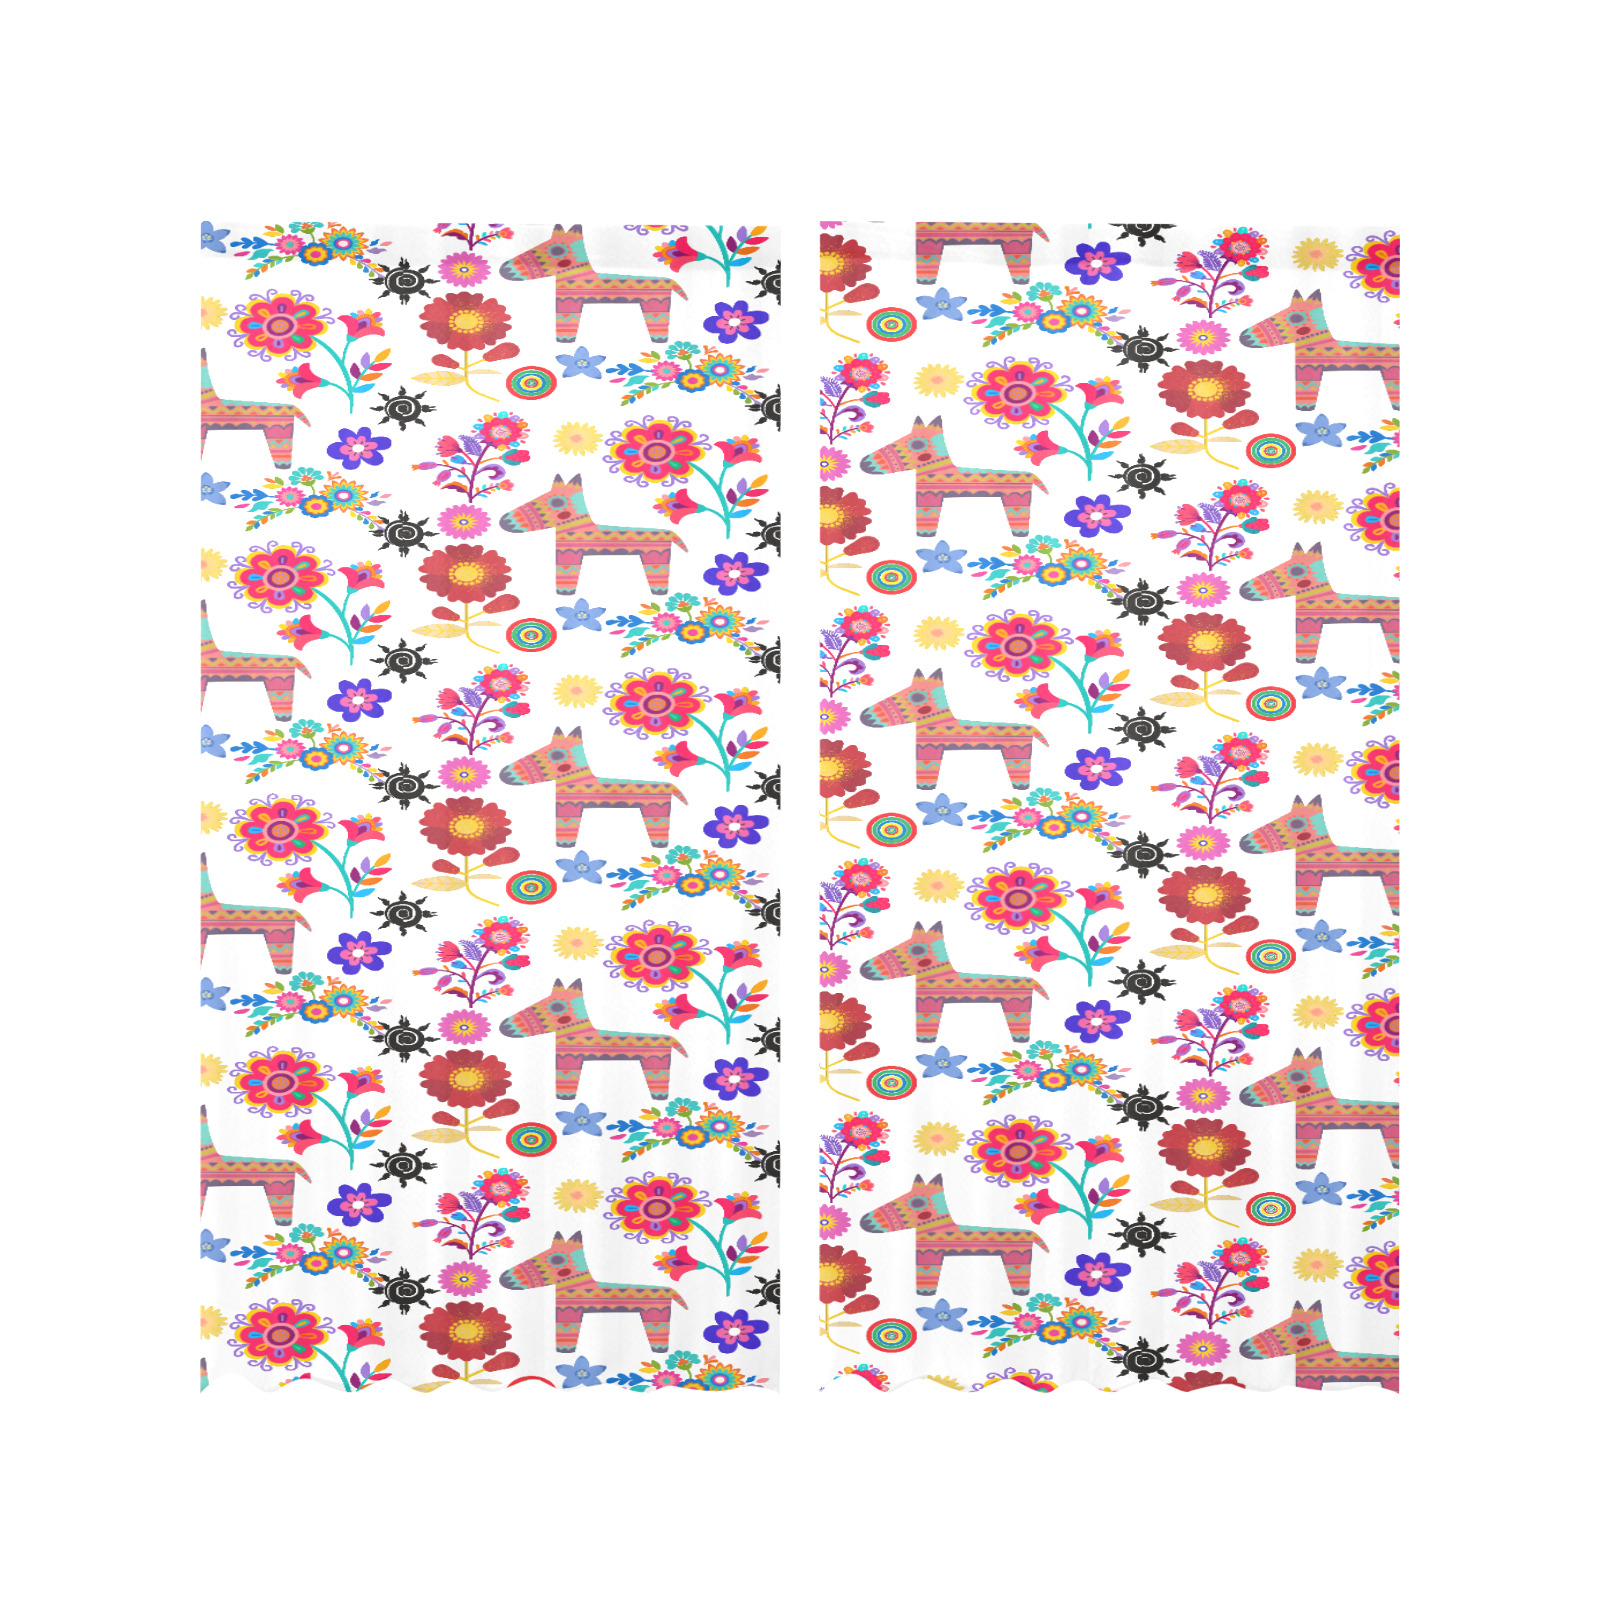 Alpaca Pinata and Flowers Gauze Curtain 28"x84" (Two-Piece)